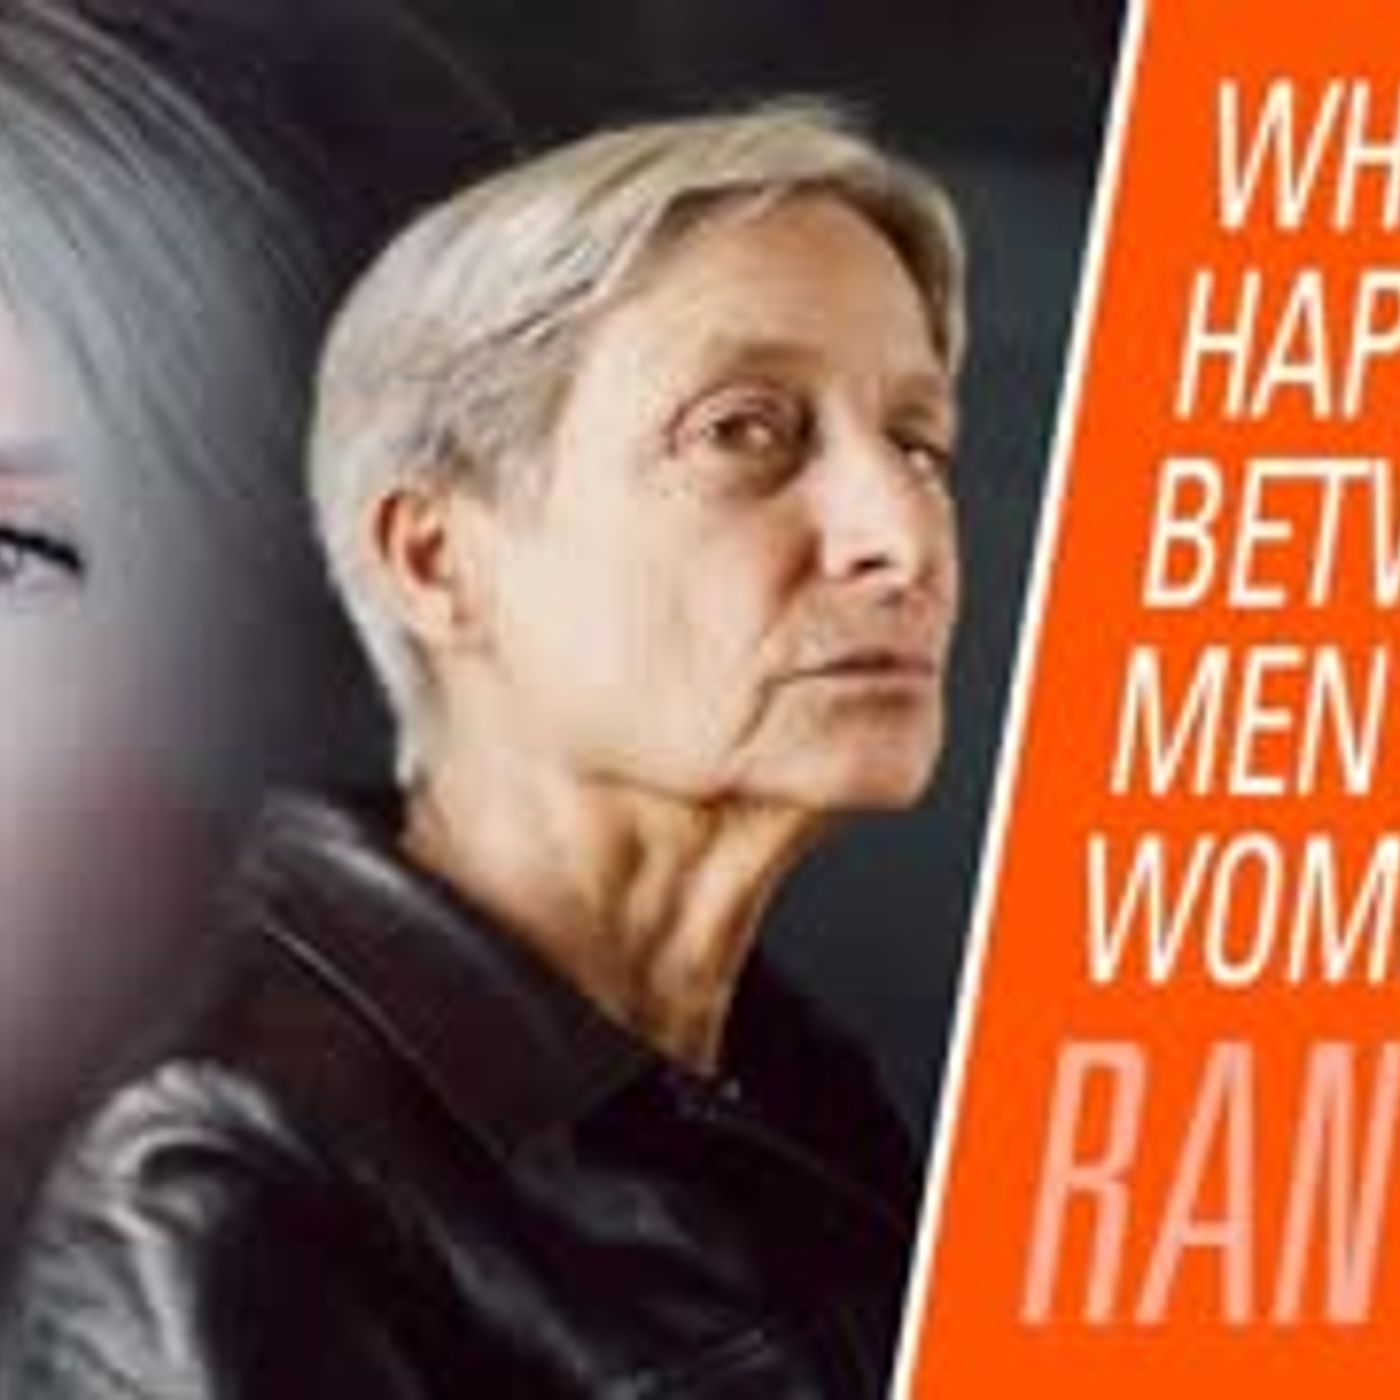 What’s happening between men and women and how do we make it worse? | Rantzerker 213